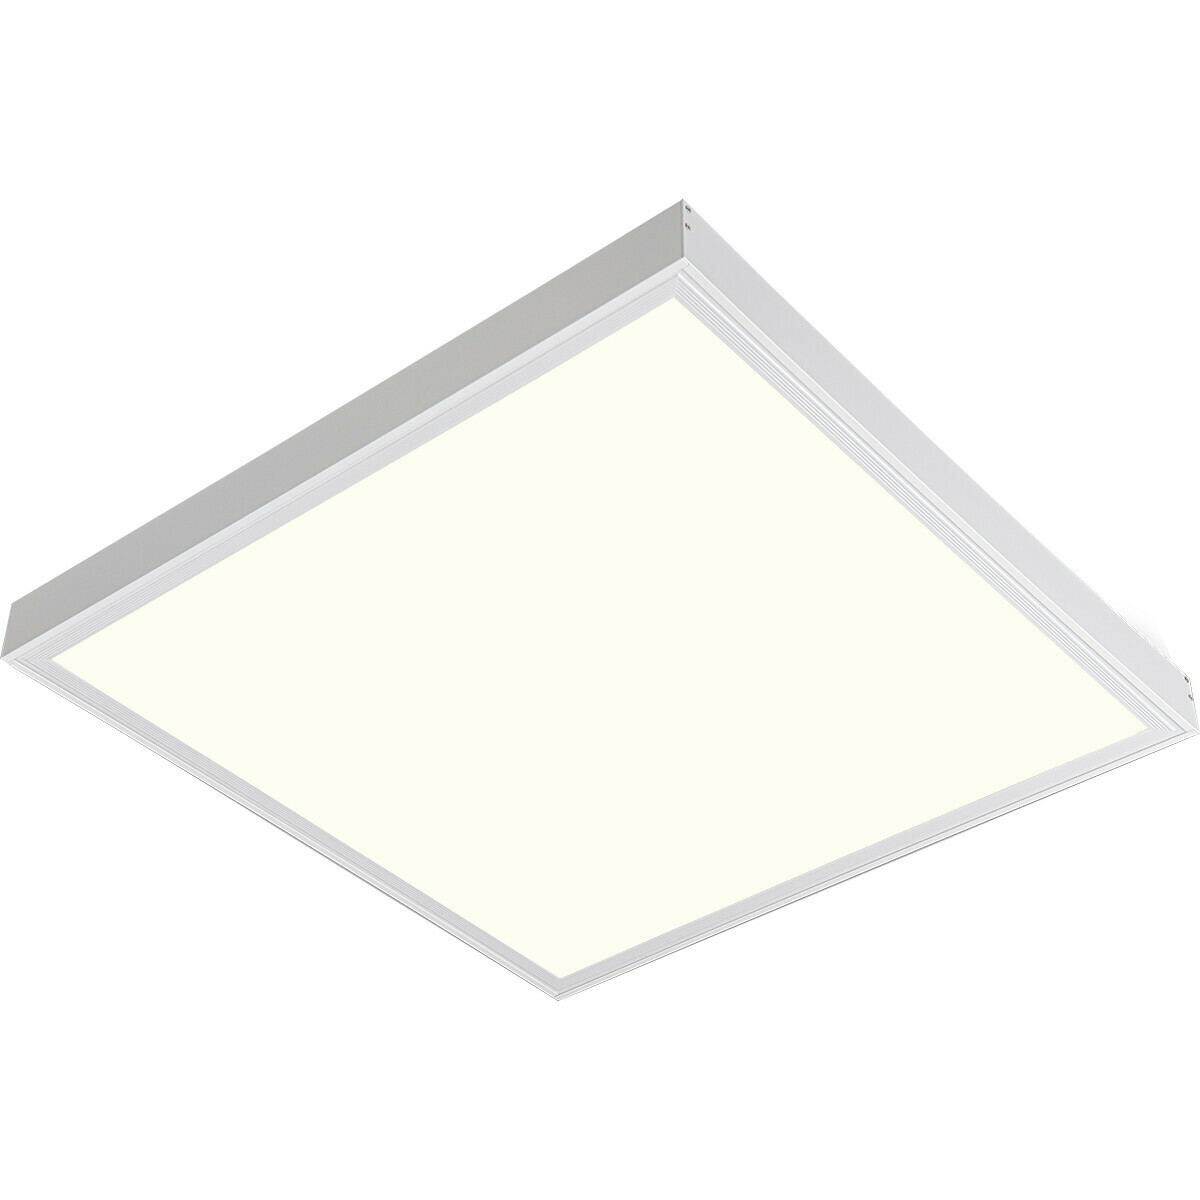 LED Paneel met Stekker - Aigi Leny - 60x60 - Natuurlijk Wit 4000K - 32W - 3840lm - 120lm/W - High Lumen - Opbouw - Vierkant - Mat Wit - Flikkervrij product afbeelding